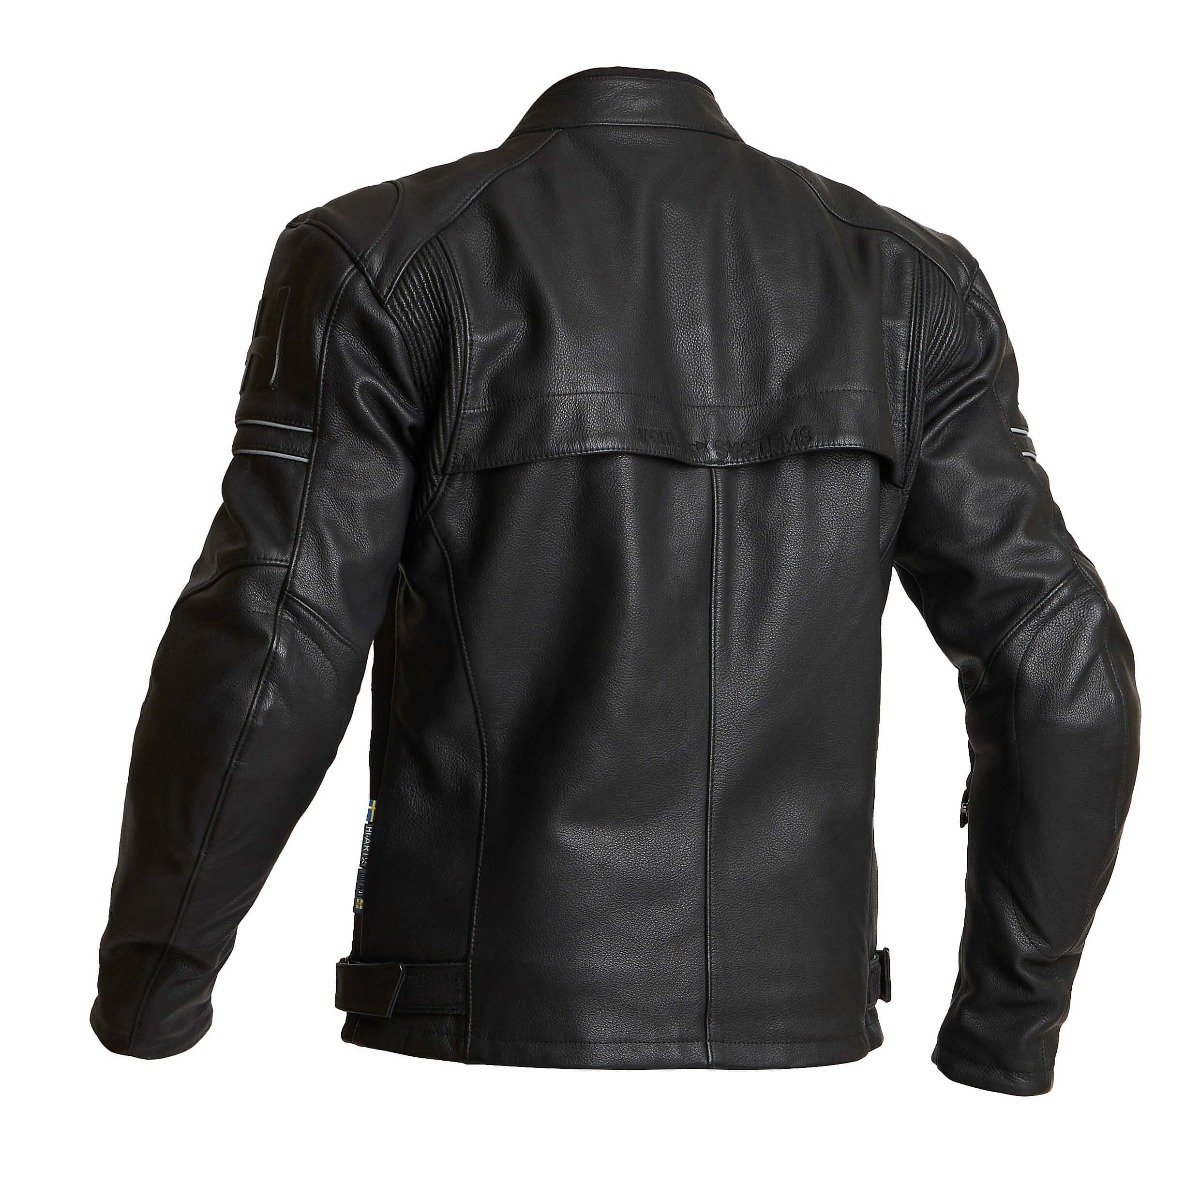 Image of Halvarssons Selja Jacket Black Size 50 EN